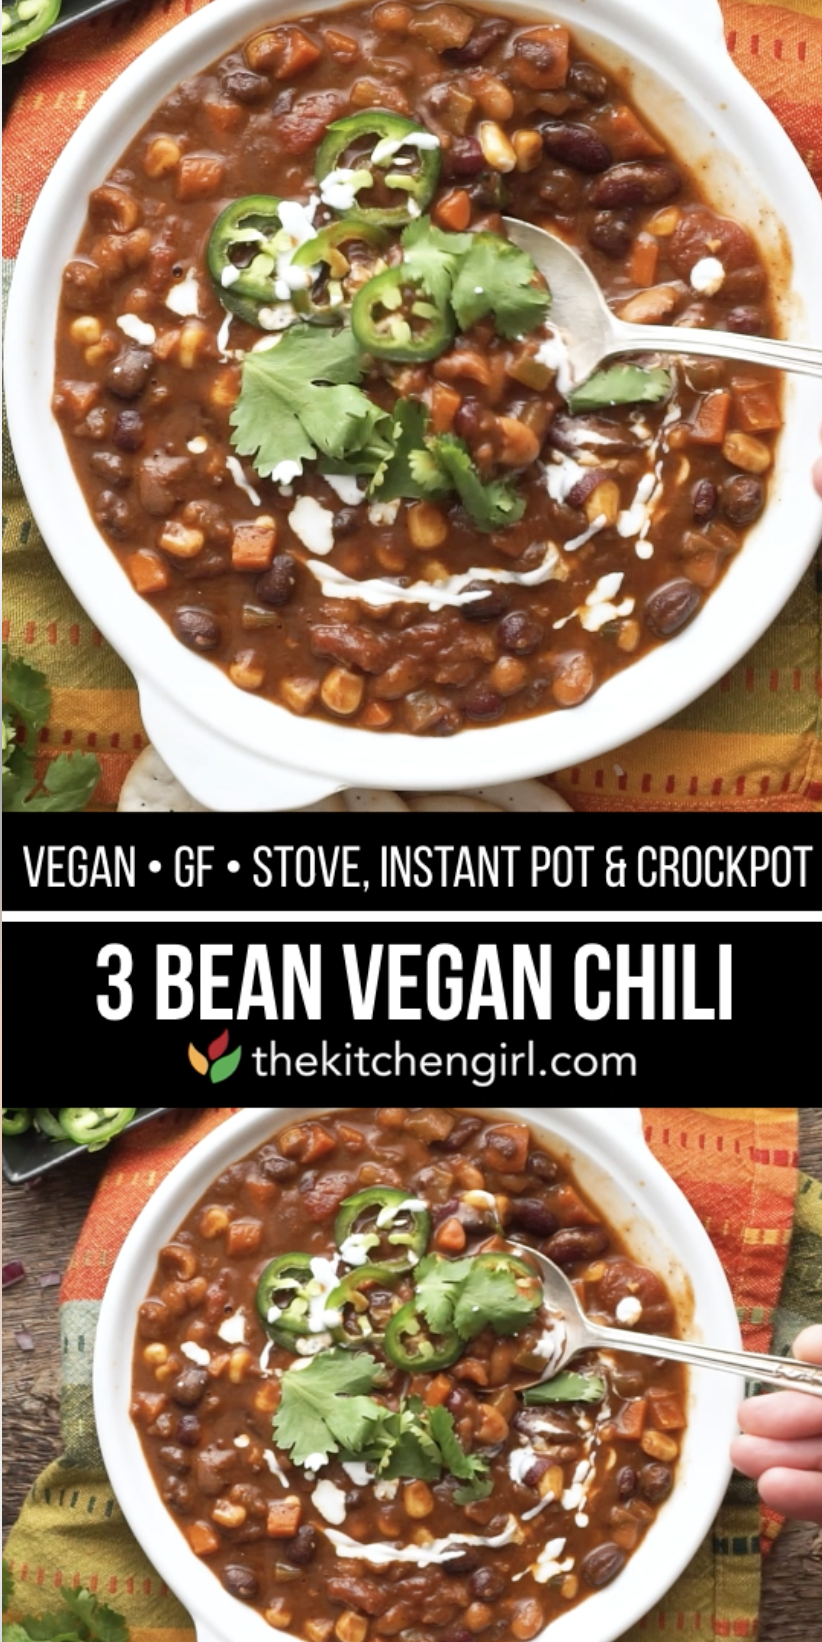 3 Bean Vegan Chili for Instant Pot, Stove & Crockpot -   25 healthy instant pot recipes vegetarian videos ideas